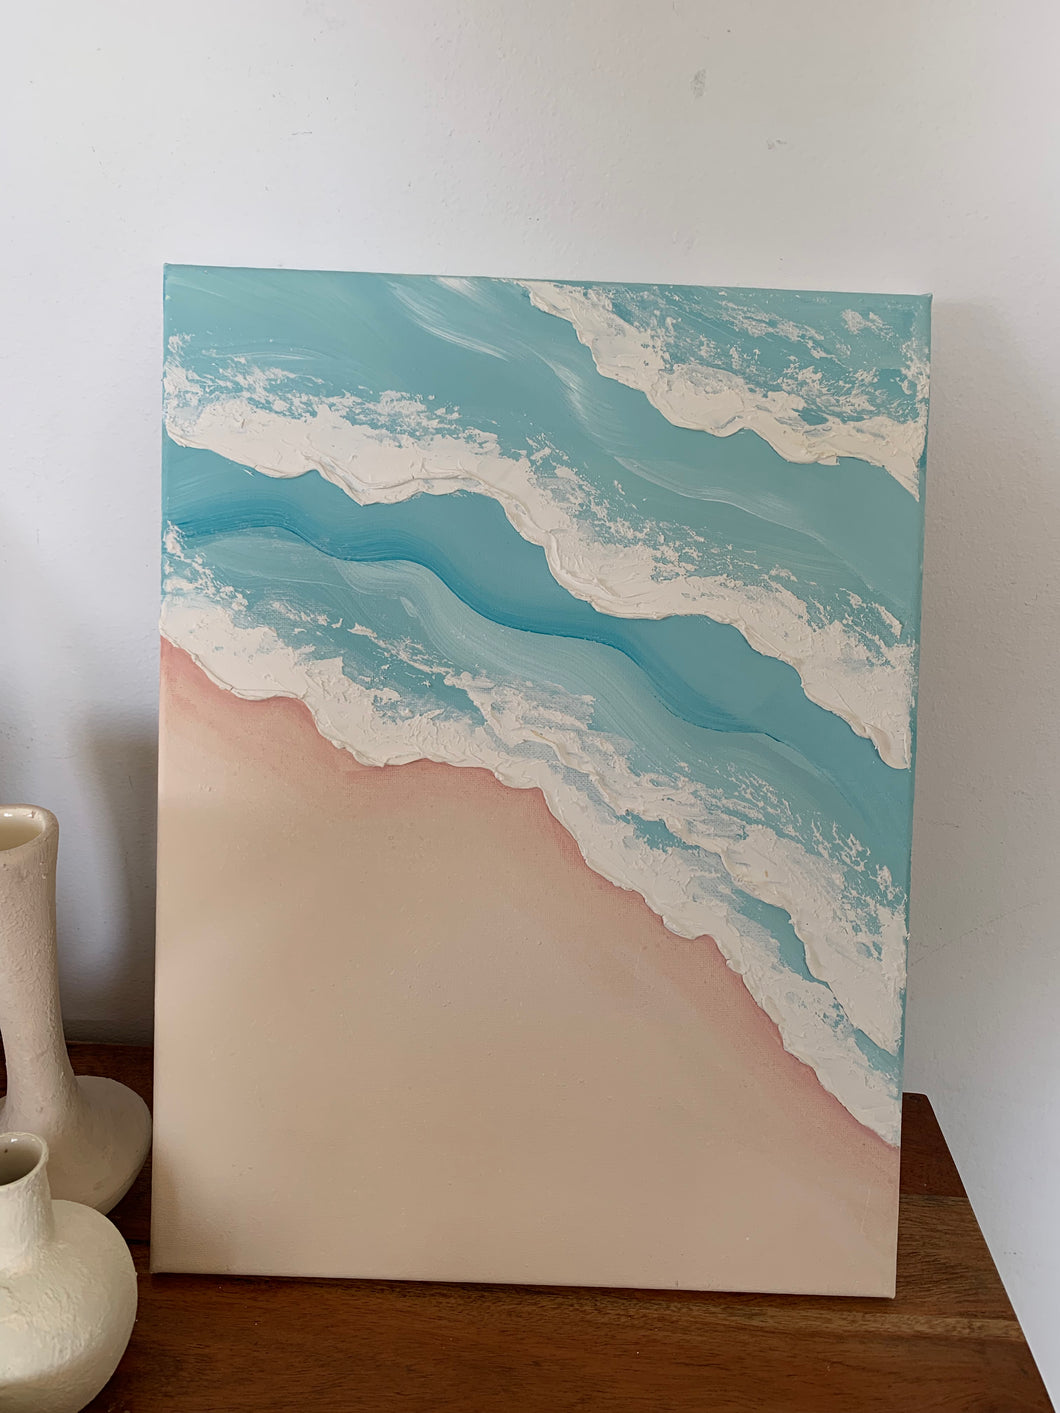 Textured beach canvas (12”x16”)